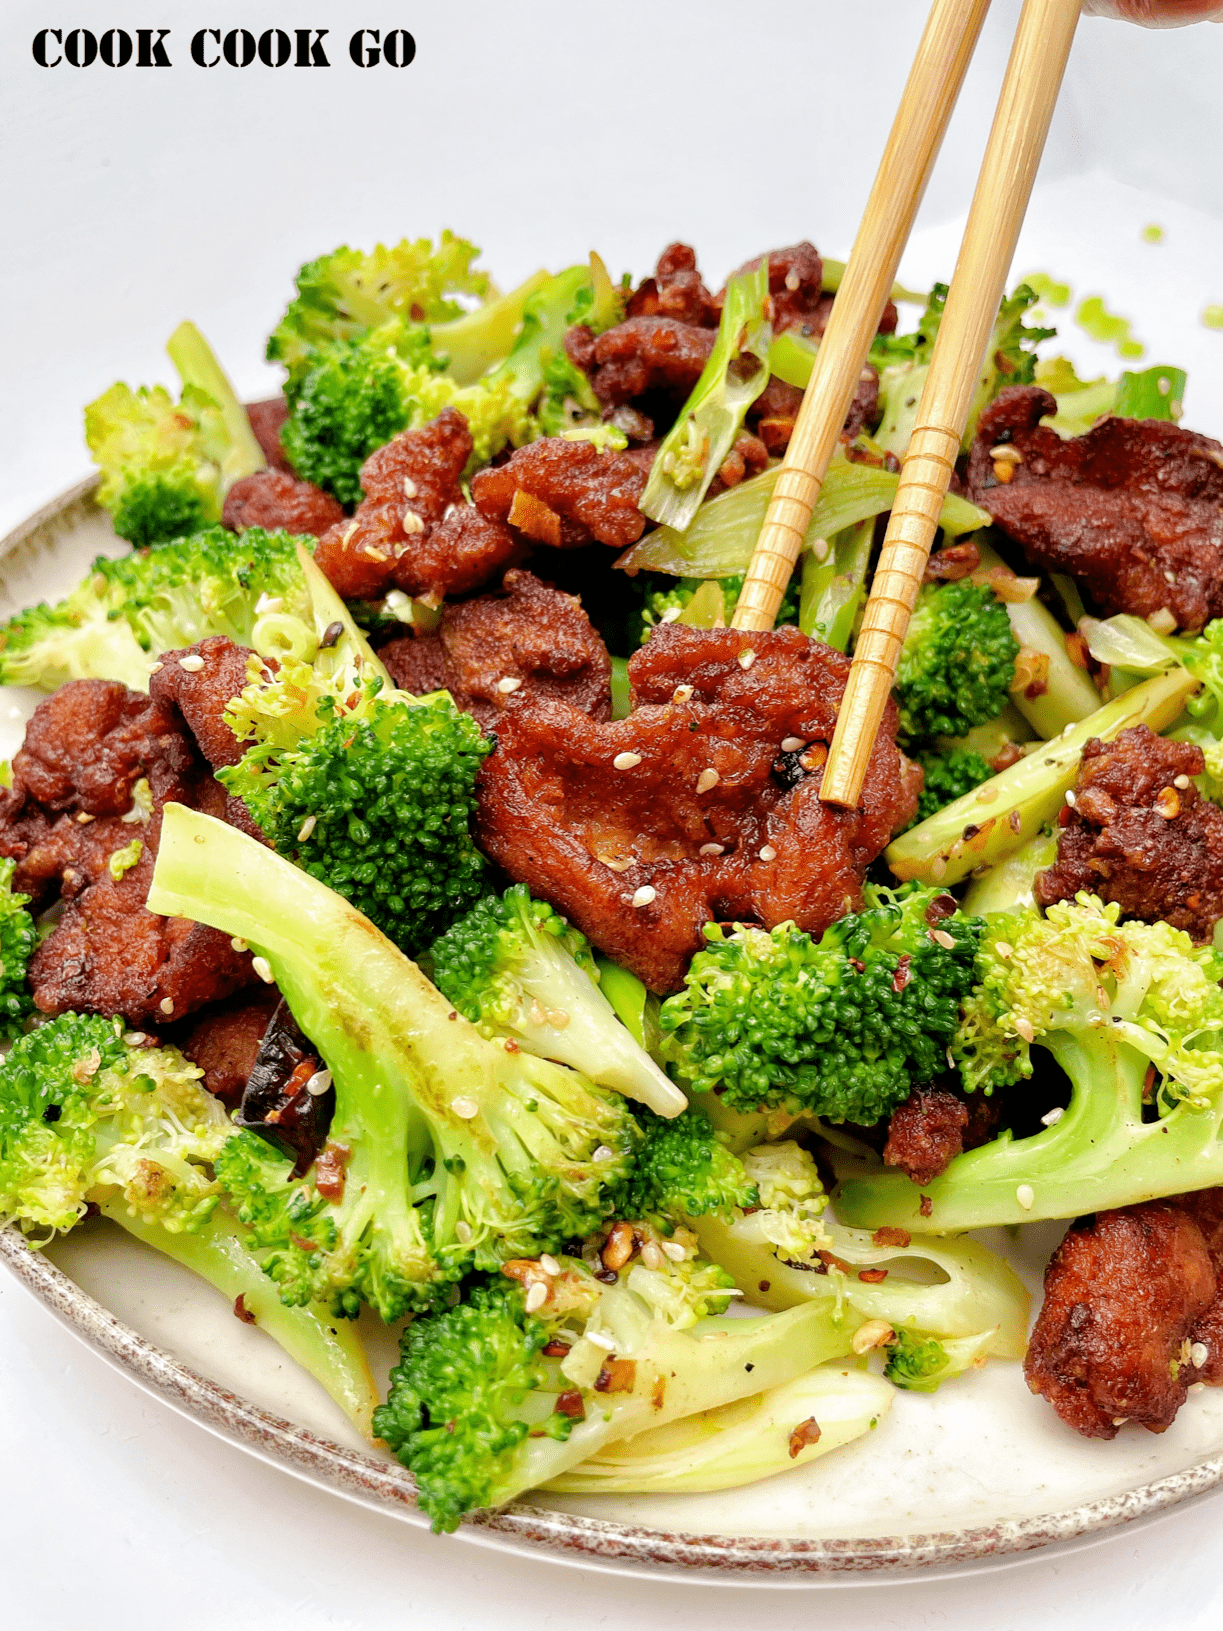 Sichuan Chili Pork Stir-fry with Broccoli